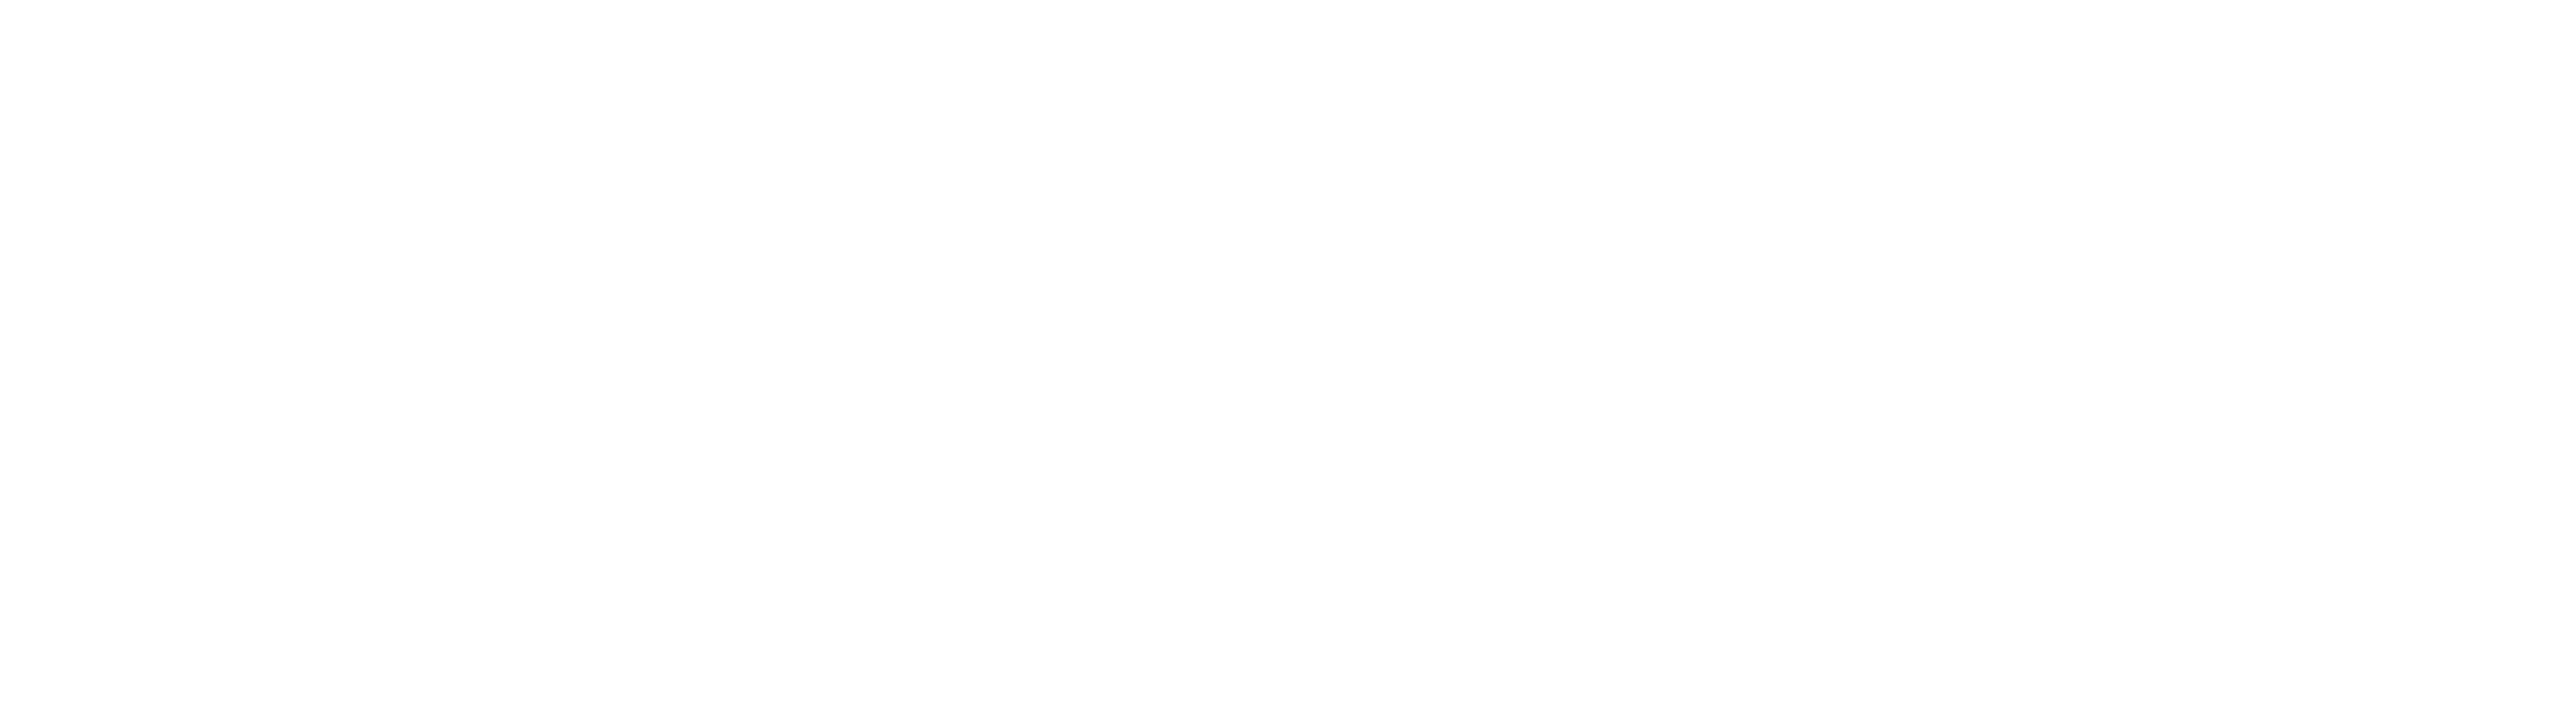 District Moving logo